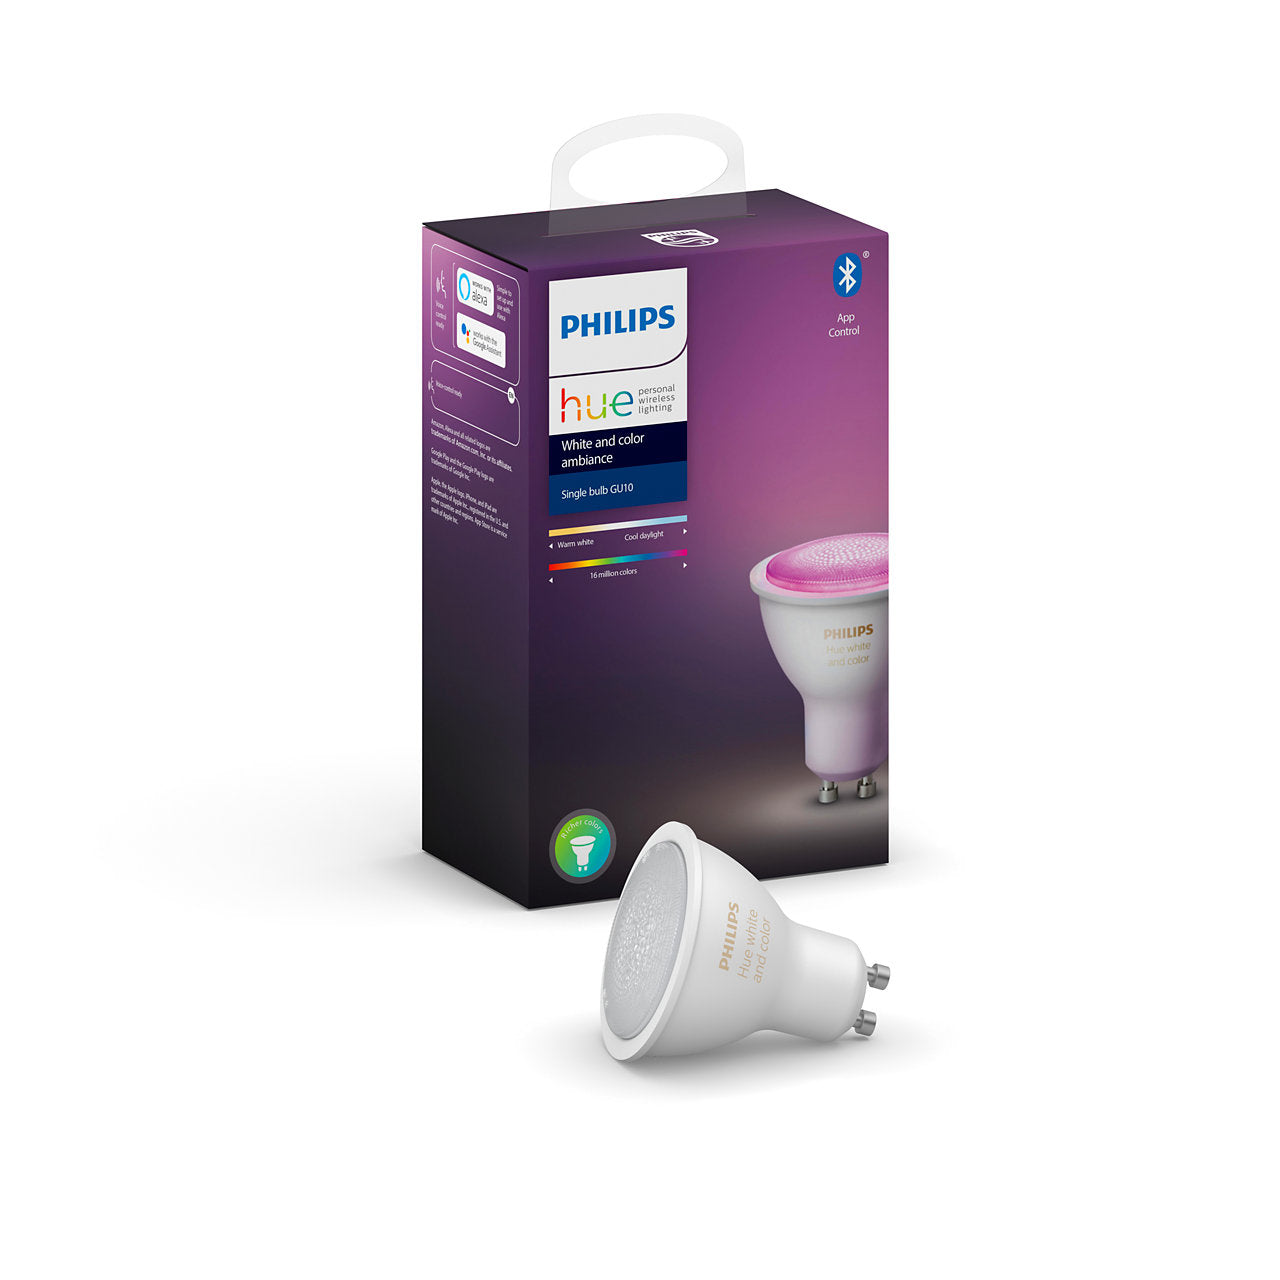 Philips Hue GU10 Globe - White and Color Bluetooth